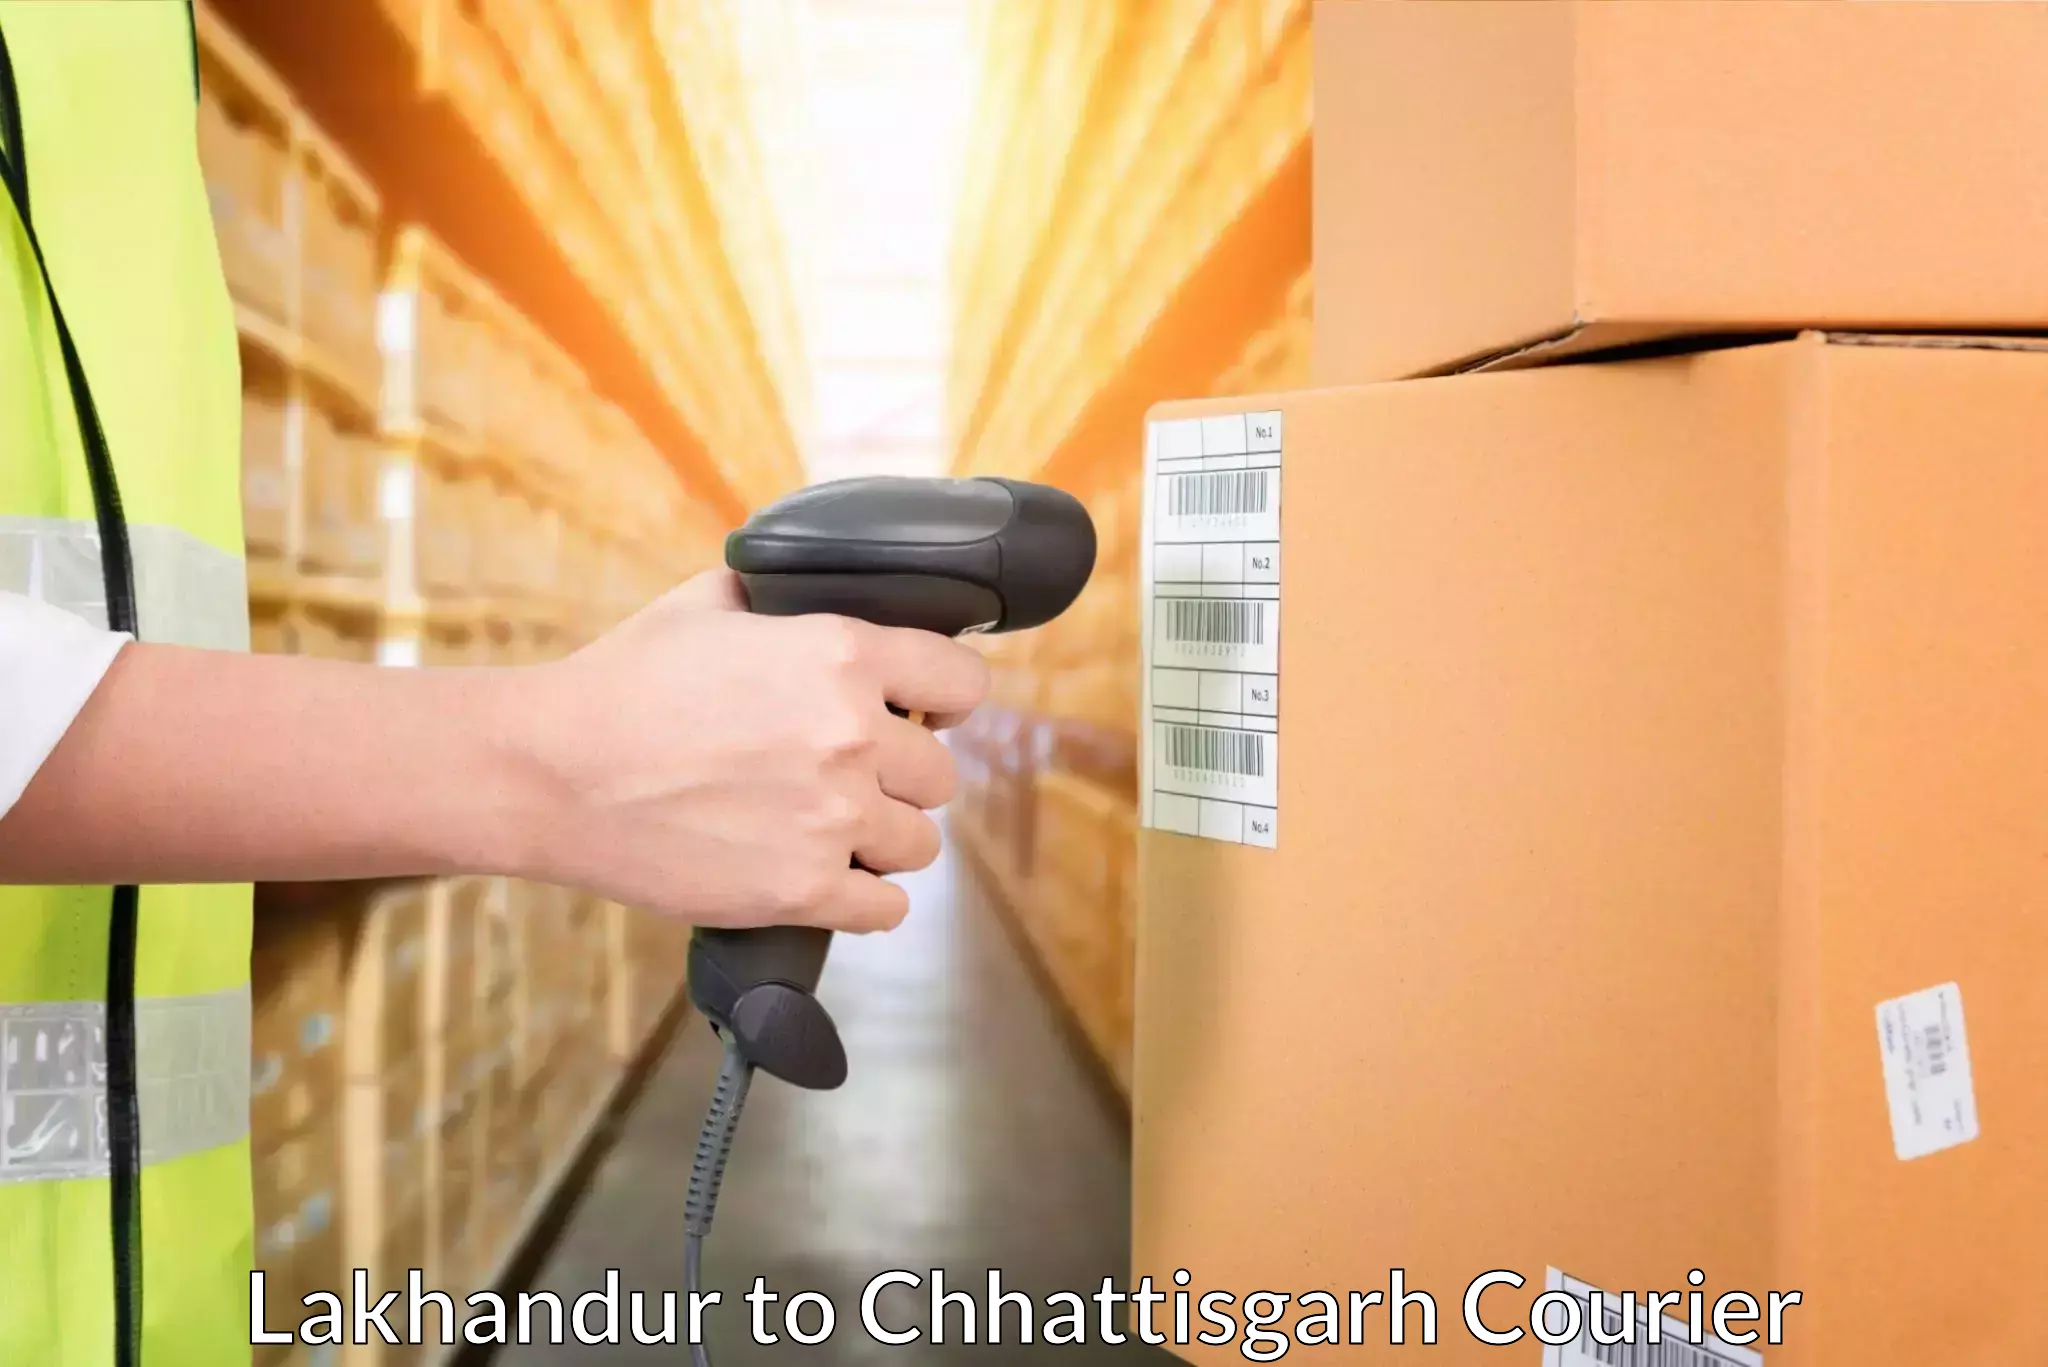 Global logistics network Lakhandur to Korea Chhattisgarh